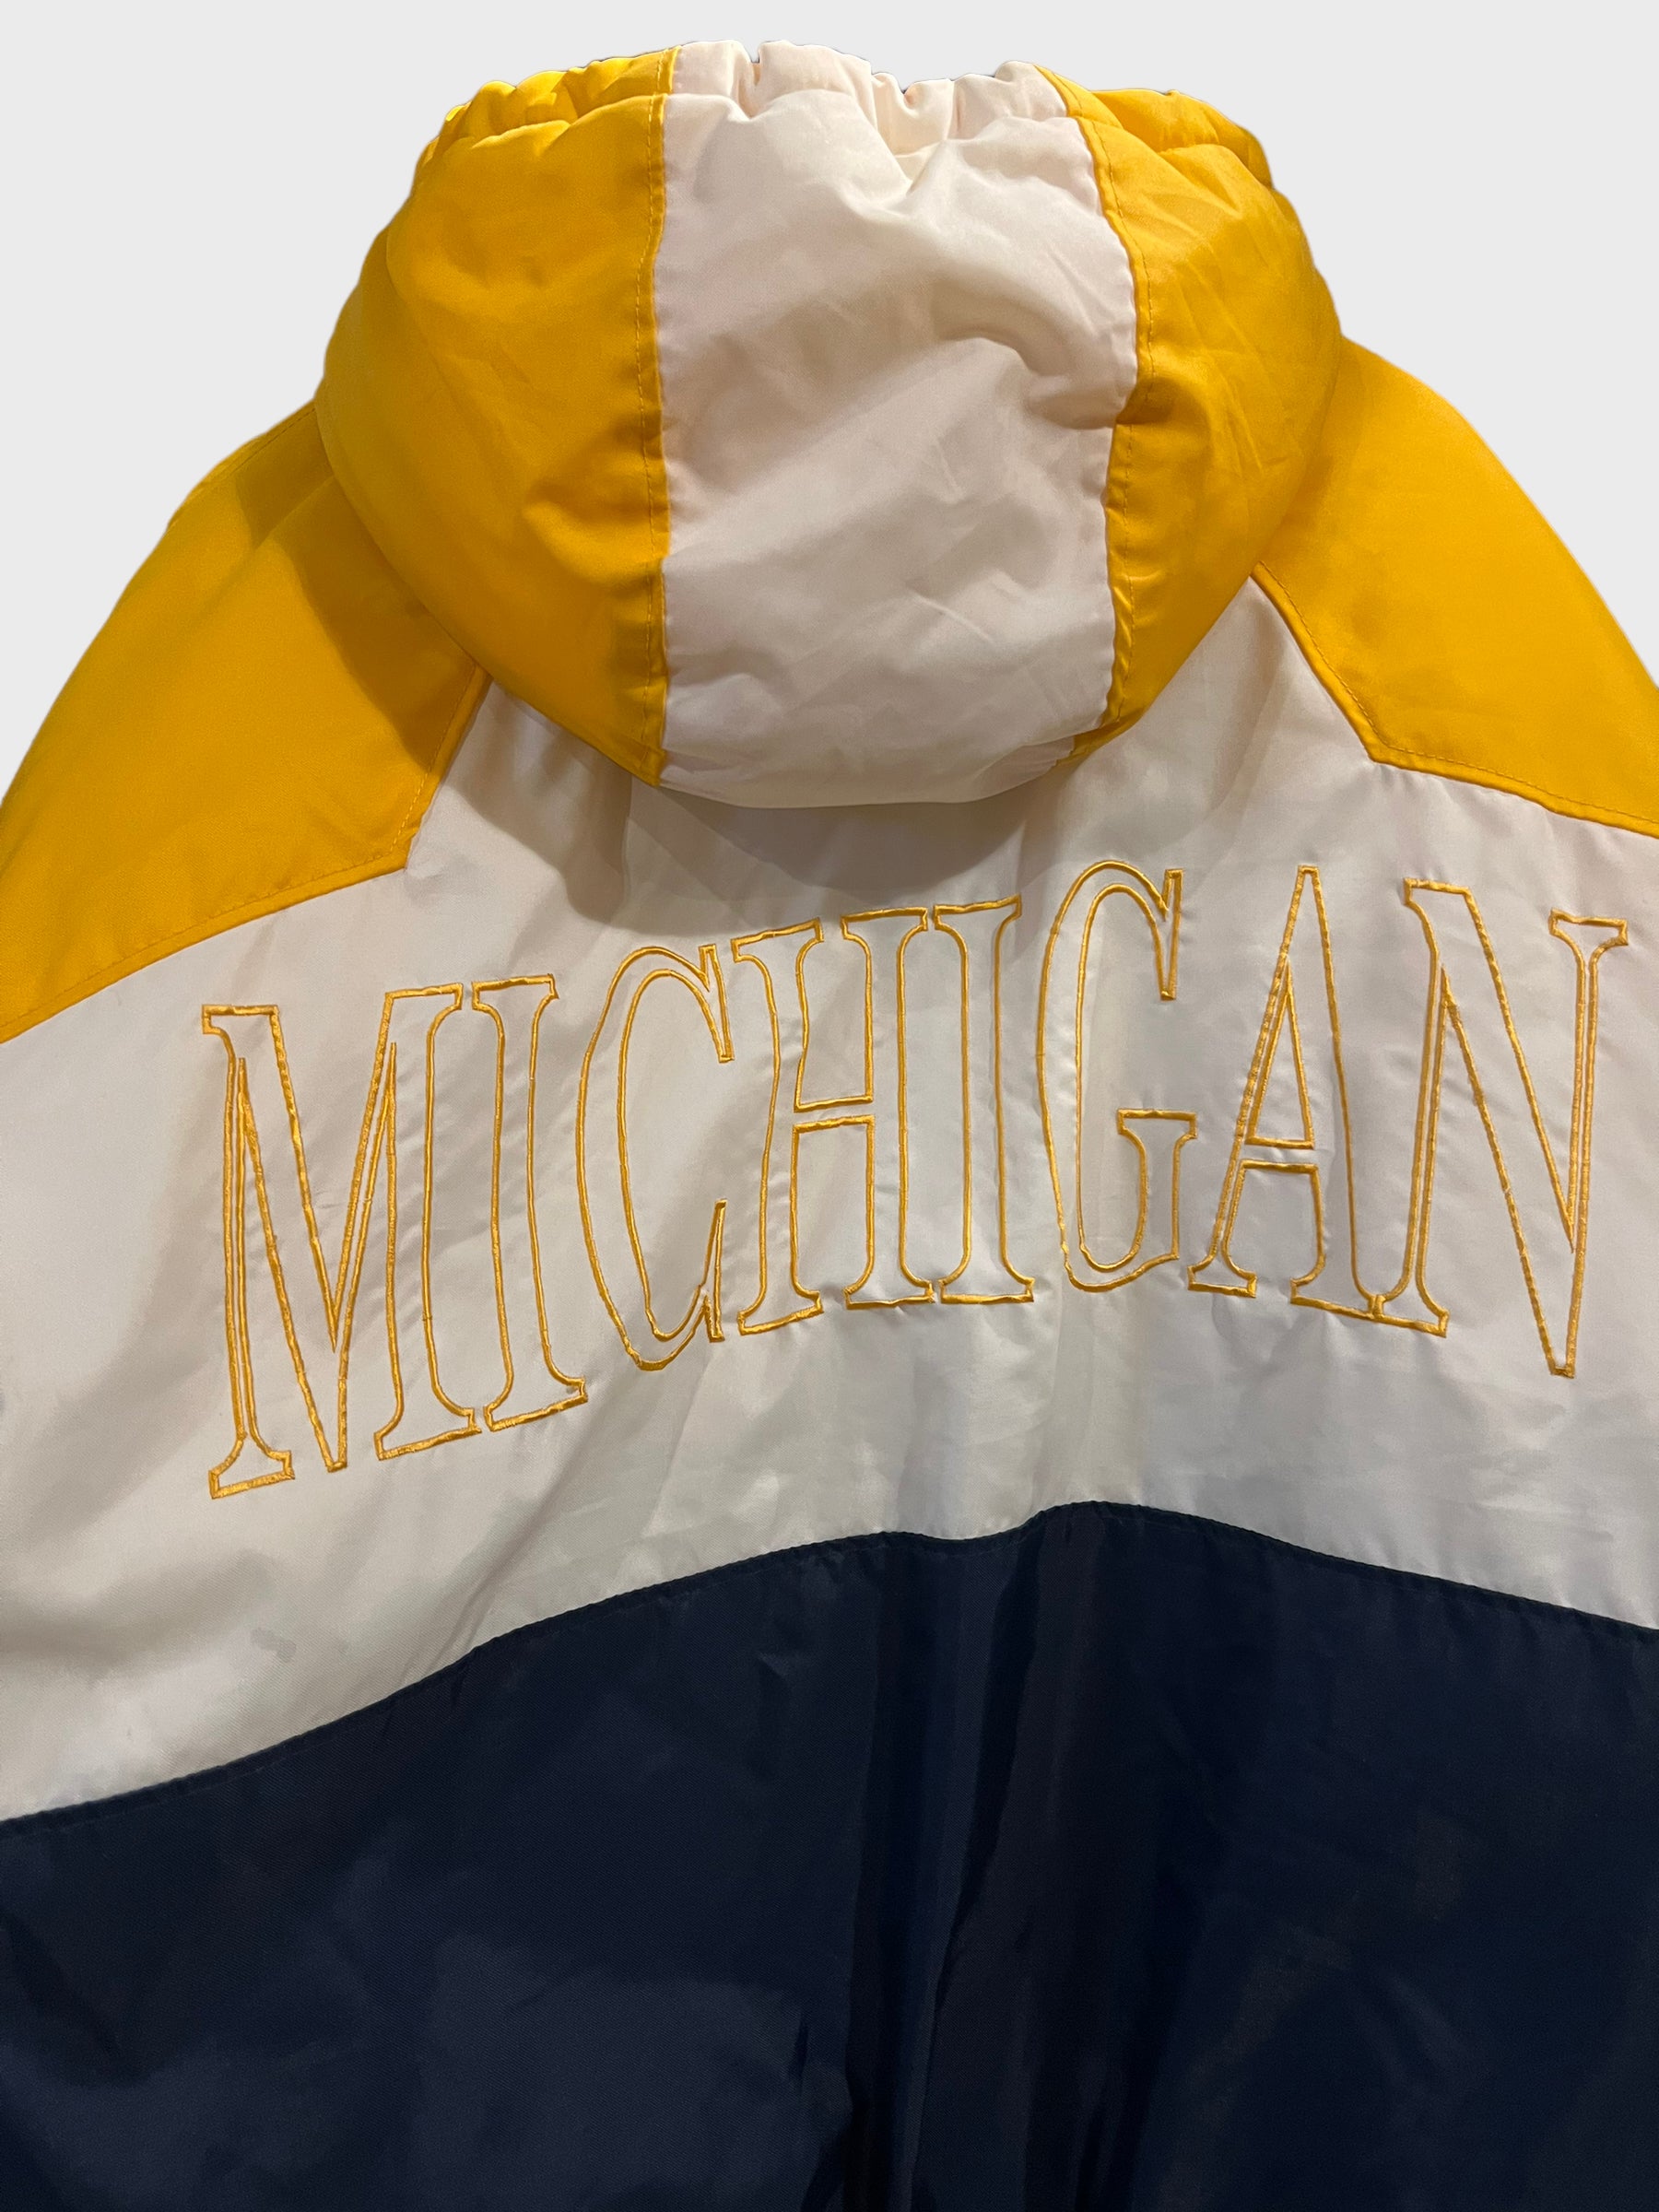 Michigan Wolverines Puffer Jacket